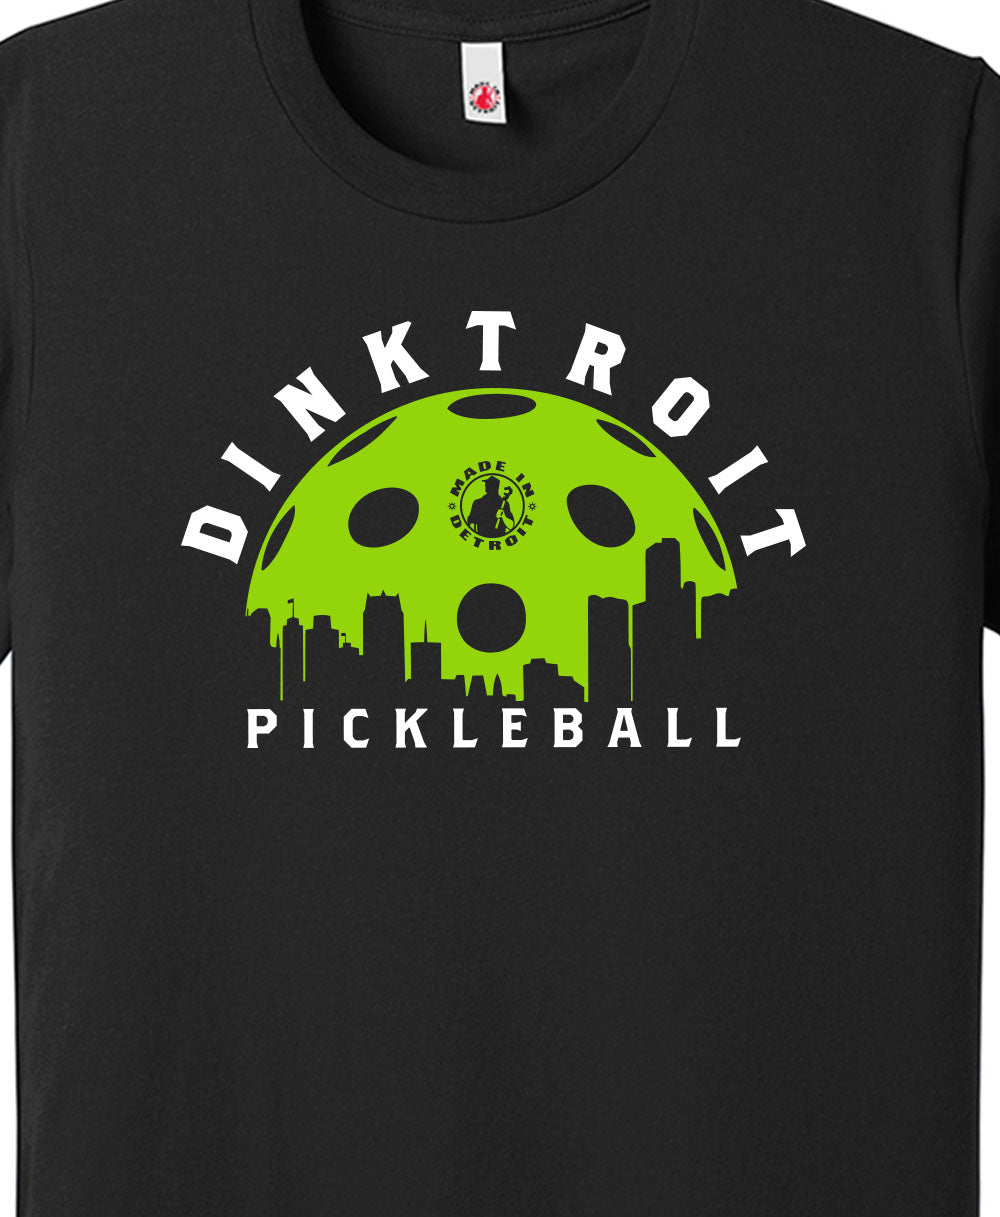 Dinktroit Pickleball Cotton T-Shirt